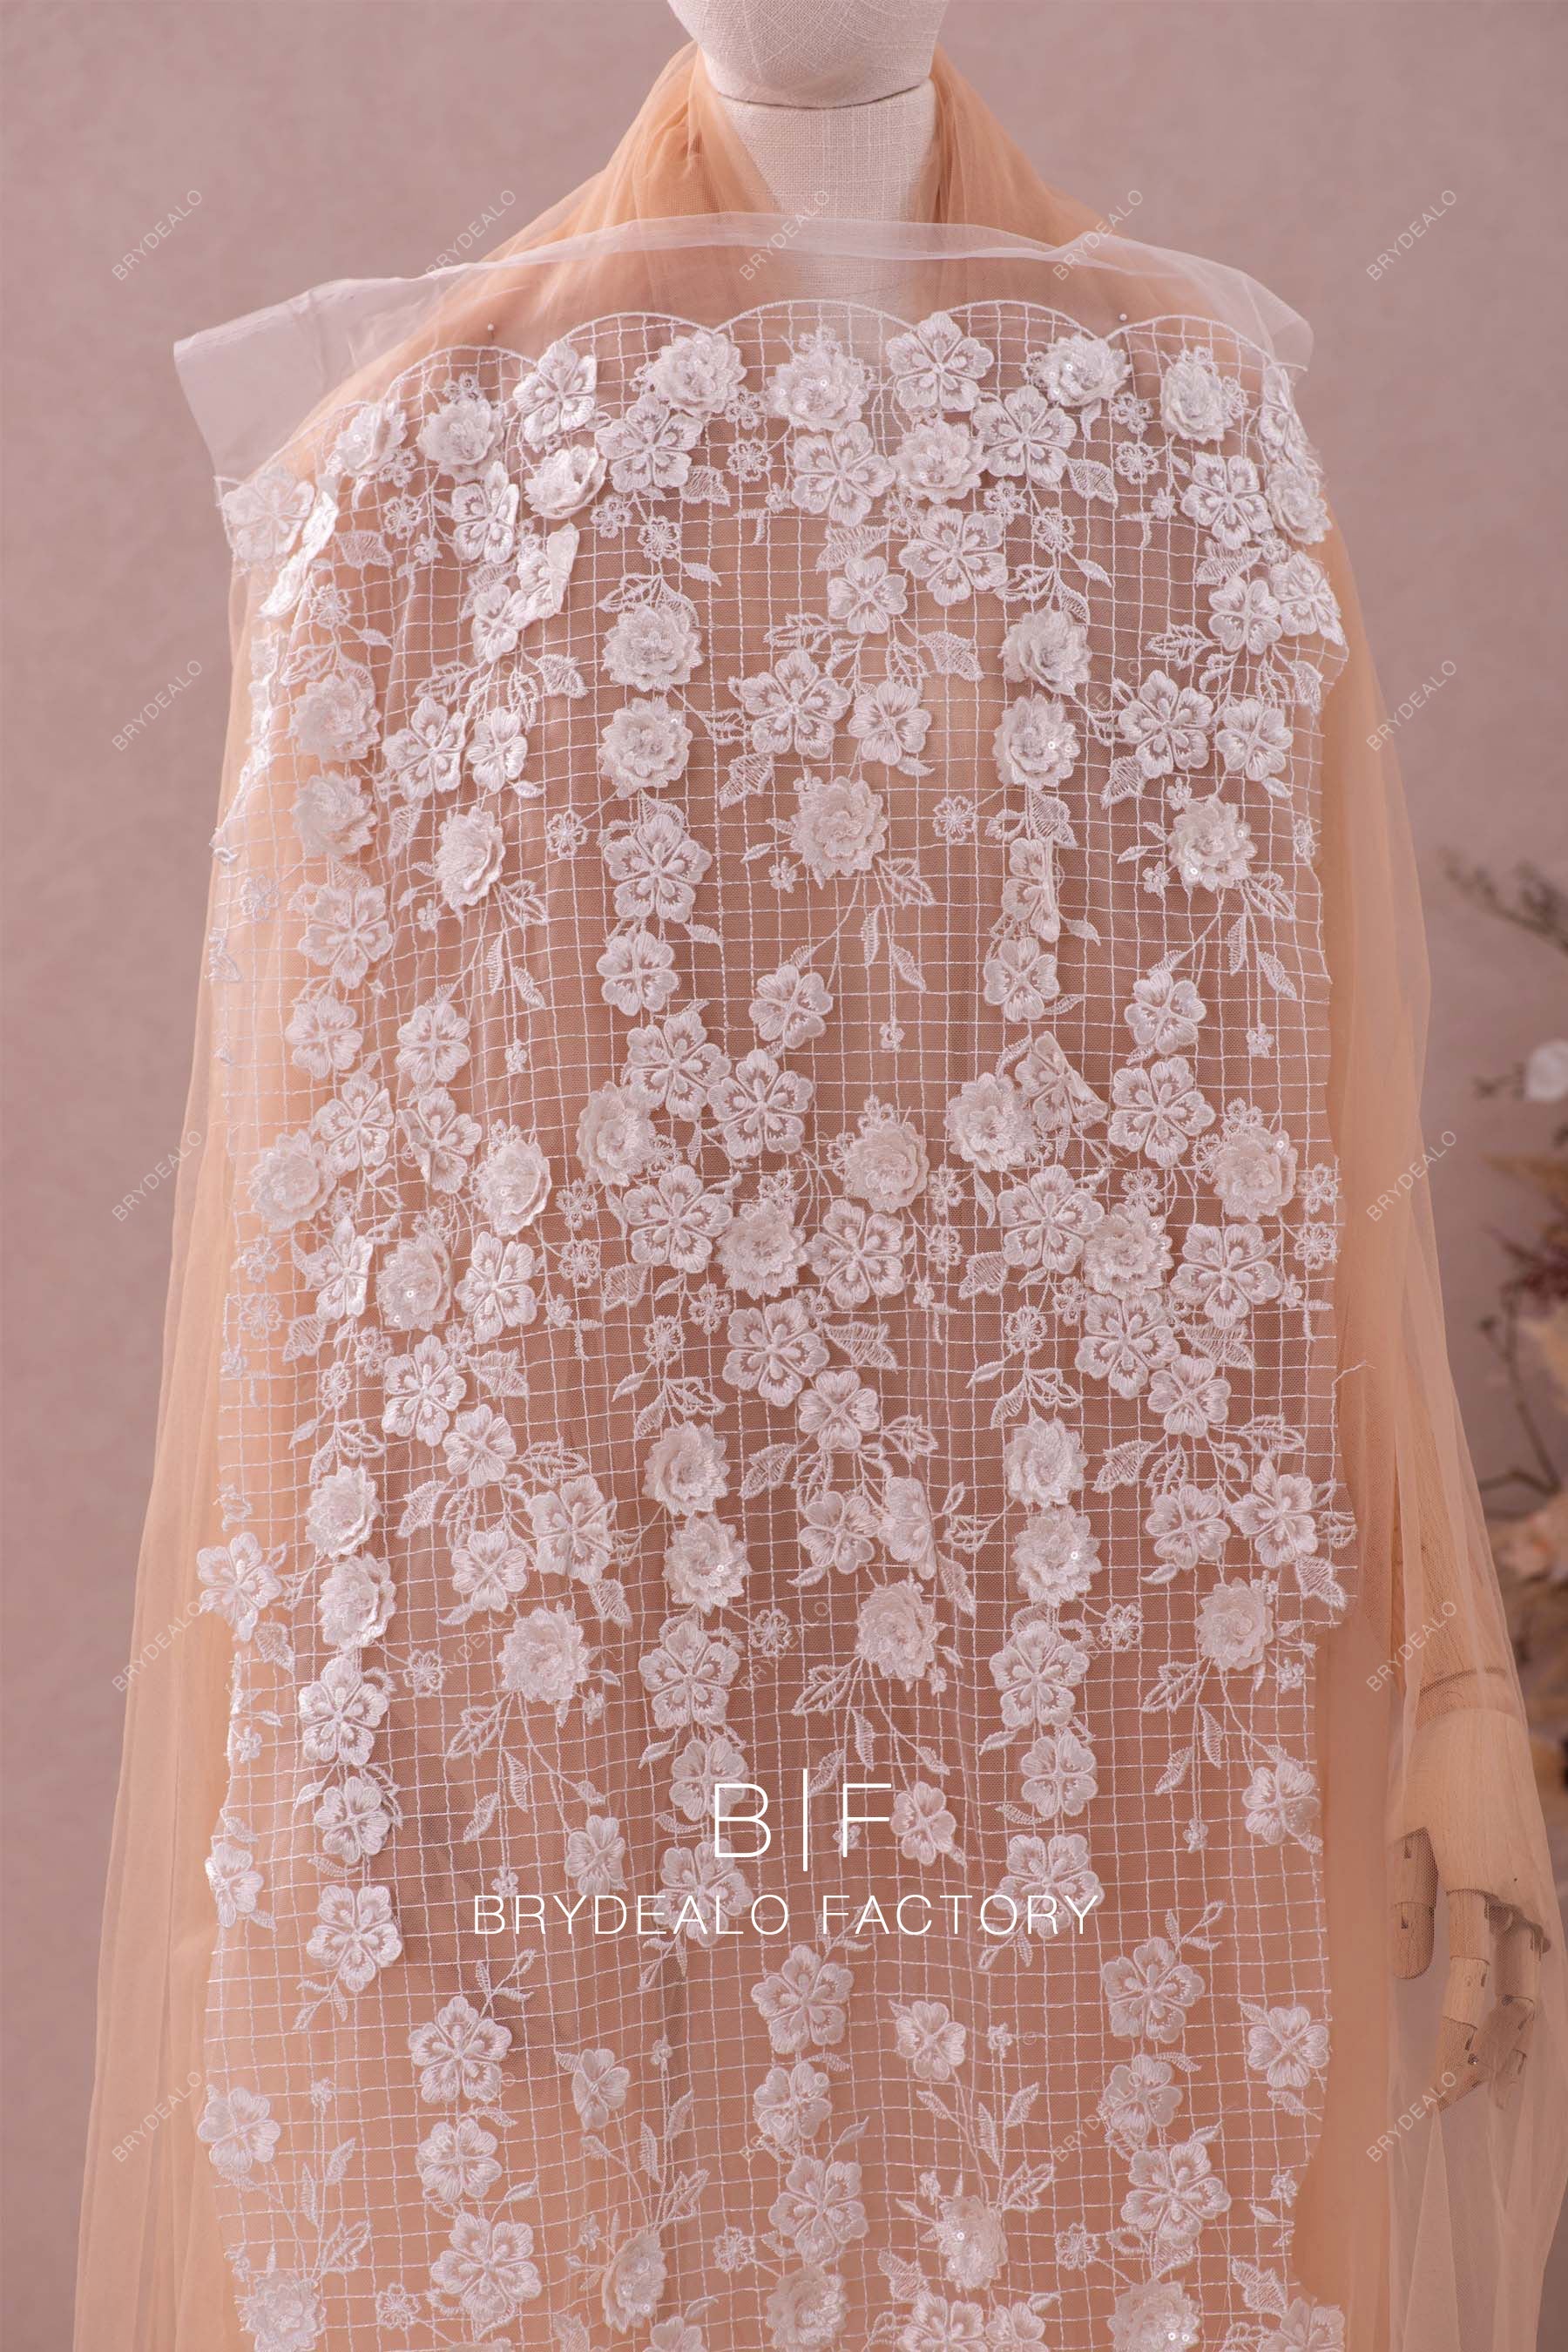 Double Border Grid Designer 3D Flower Lace Fabric for Dresses